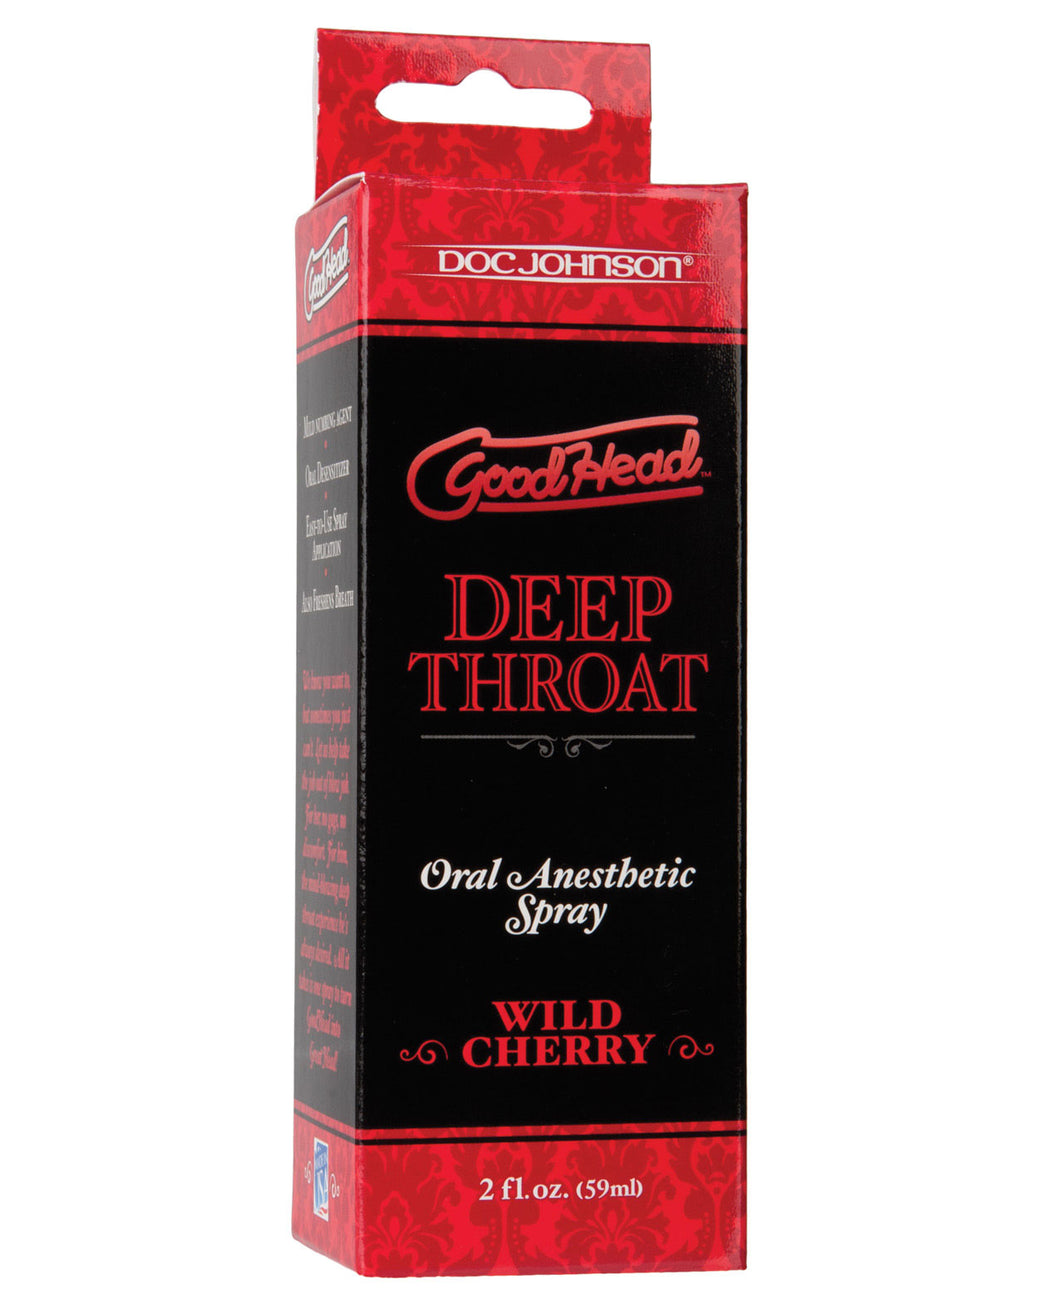 Good Head Throat Spray - Cherry